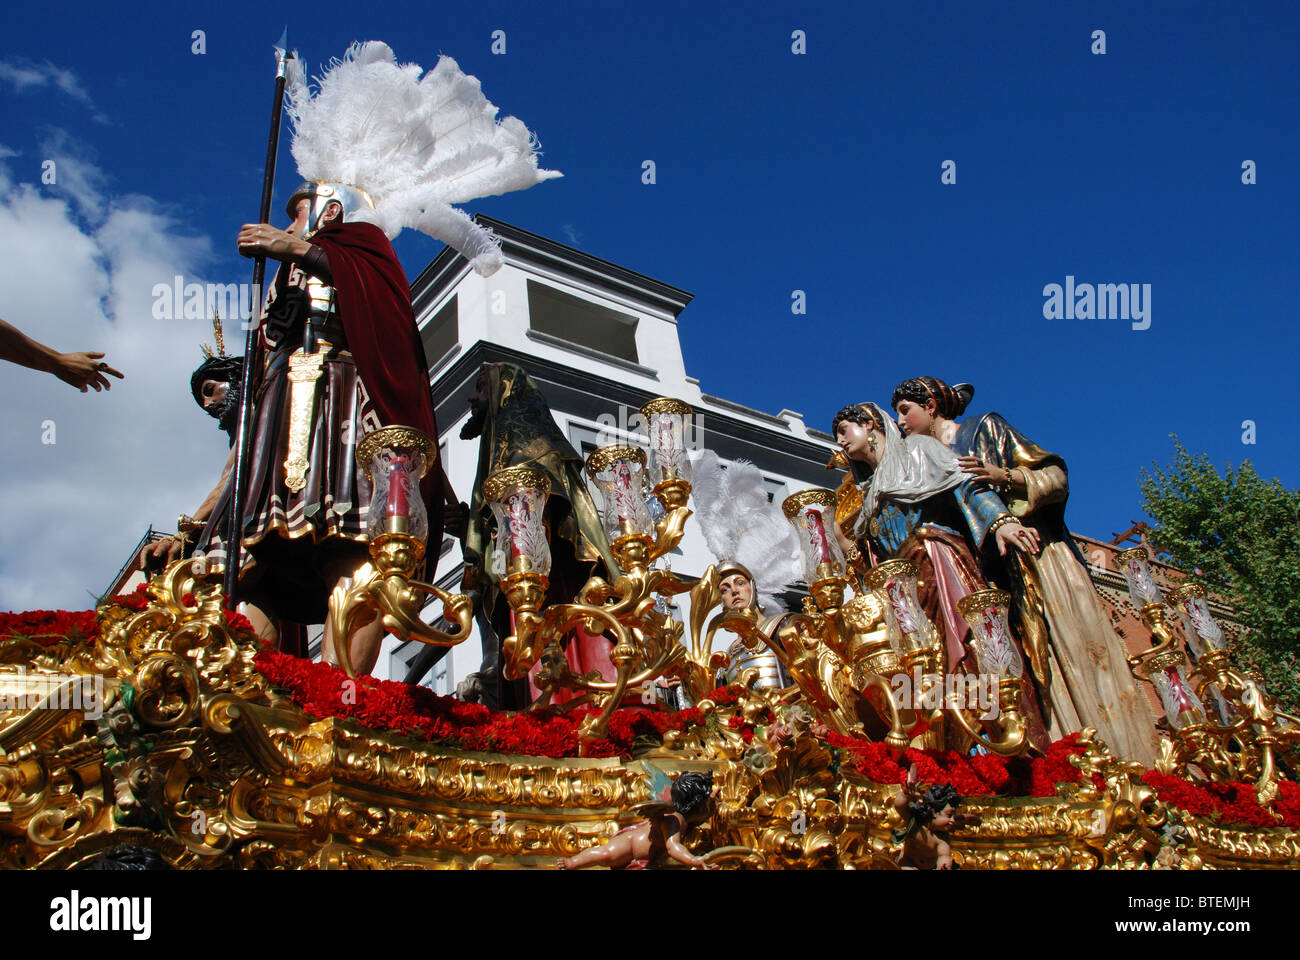 Semana santa sevilla hi-res stock photography and images - Alamy